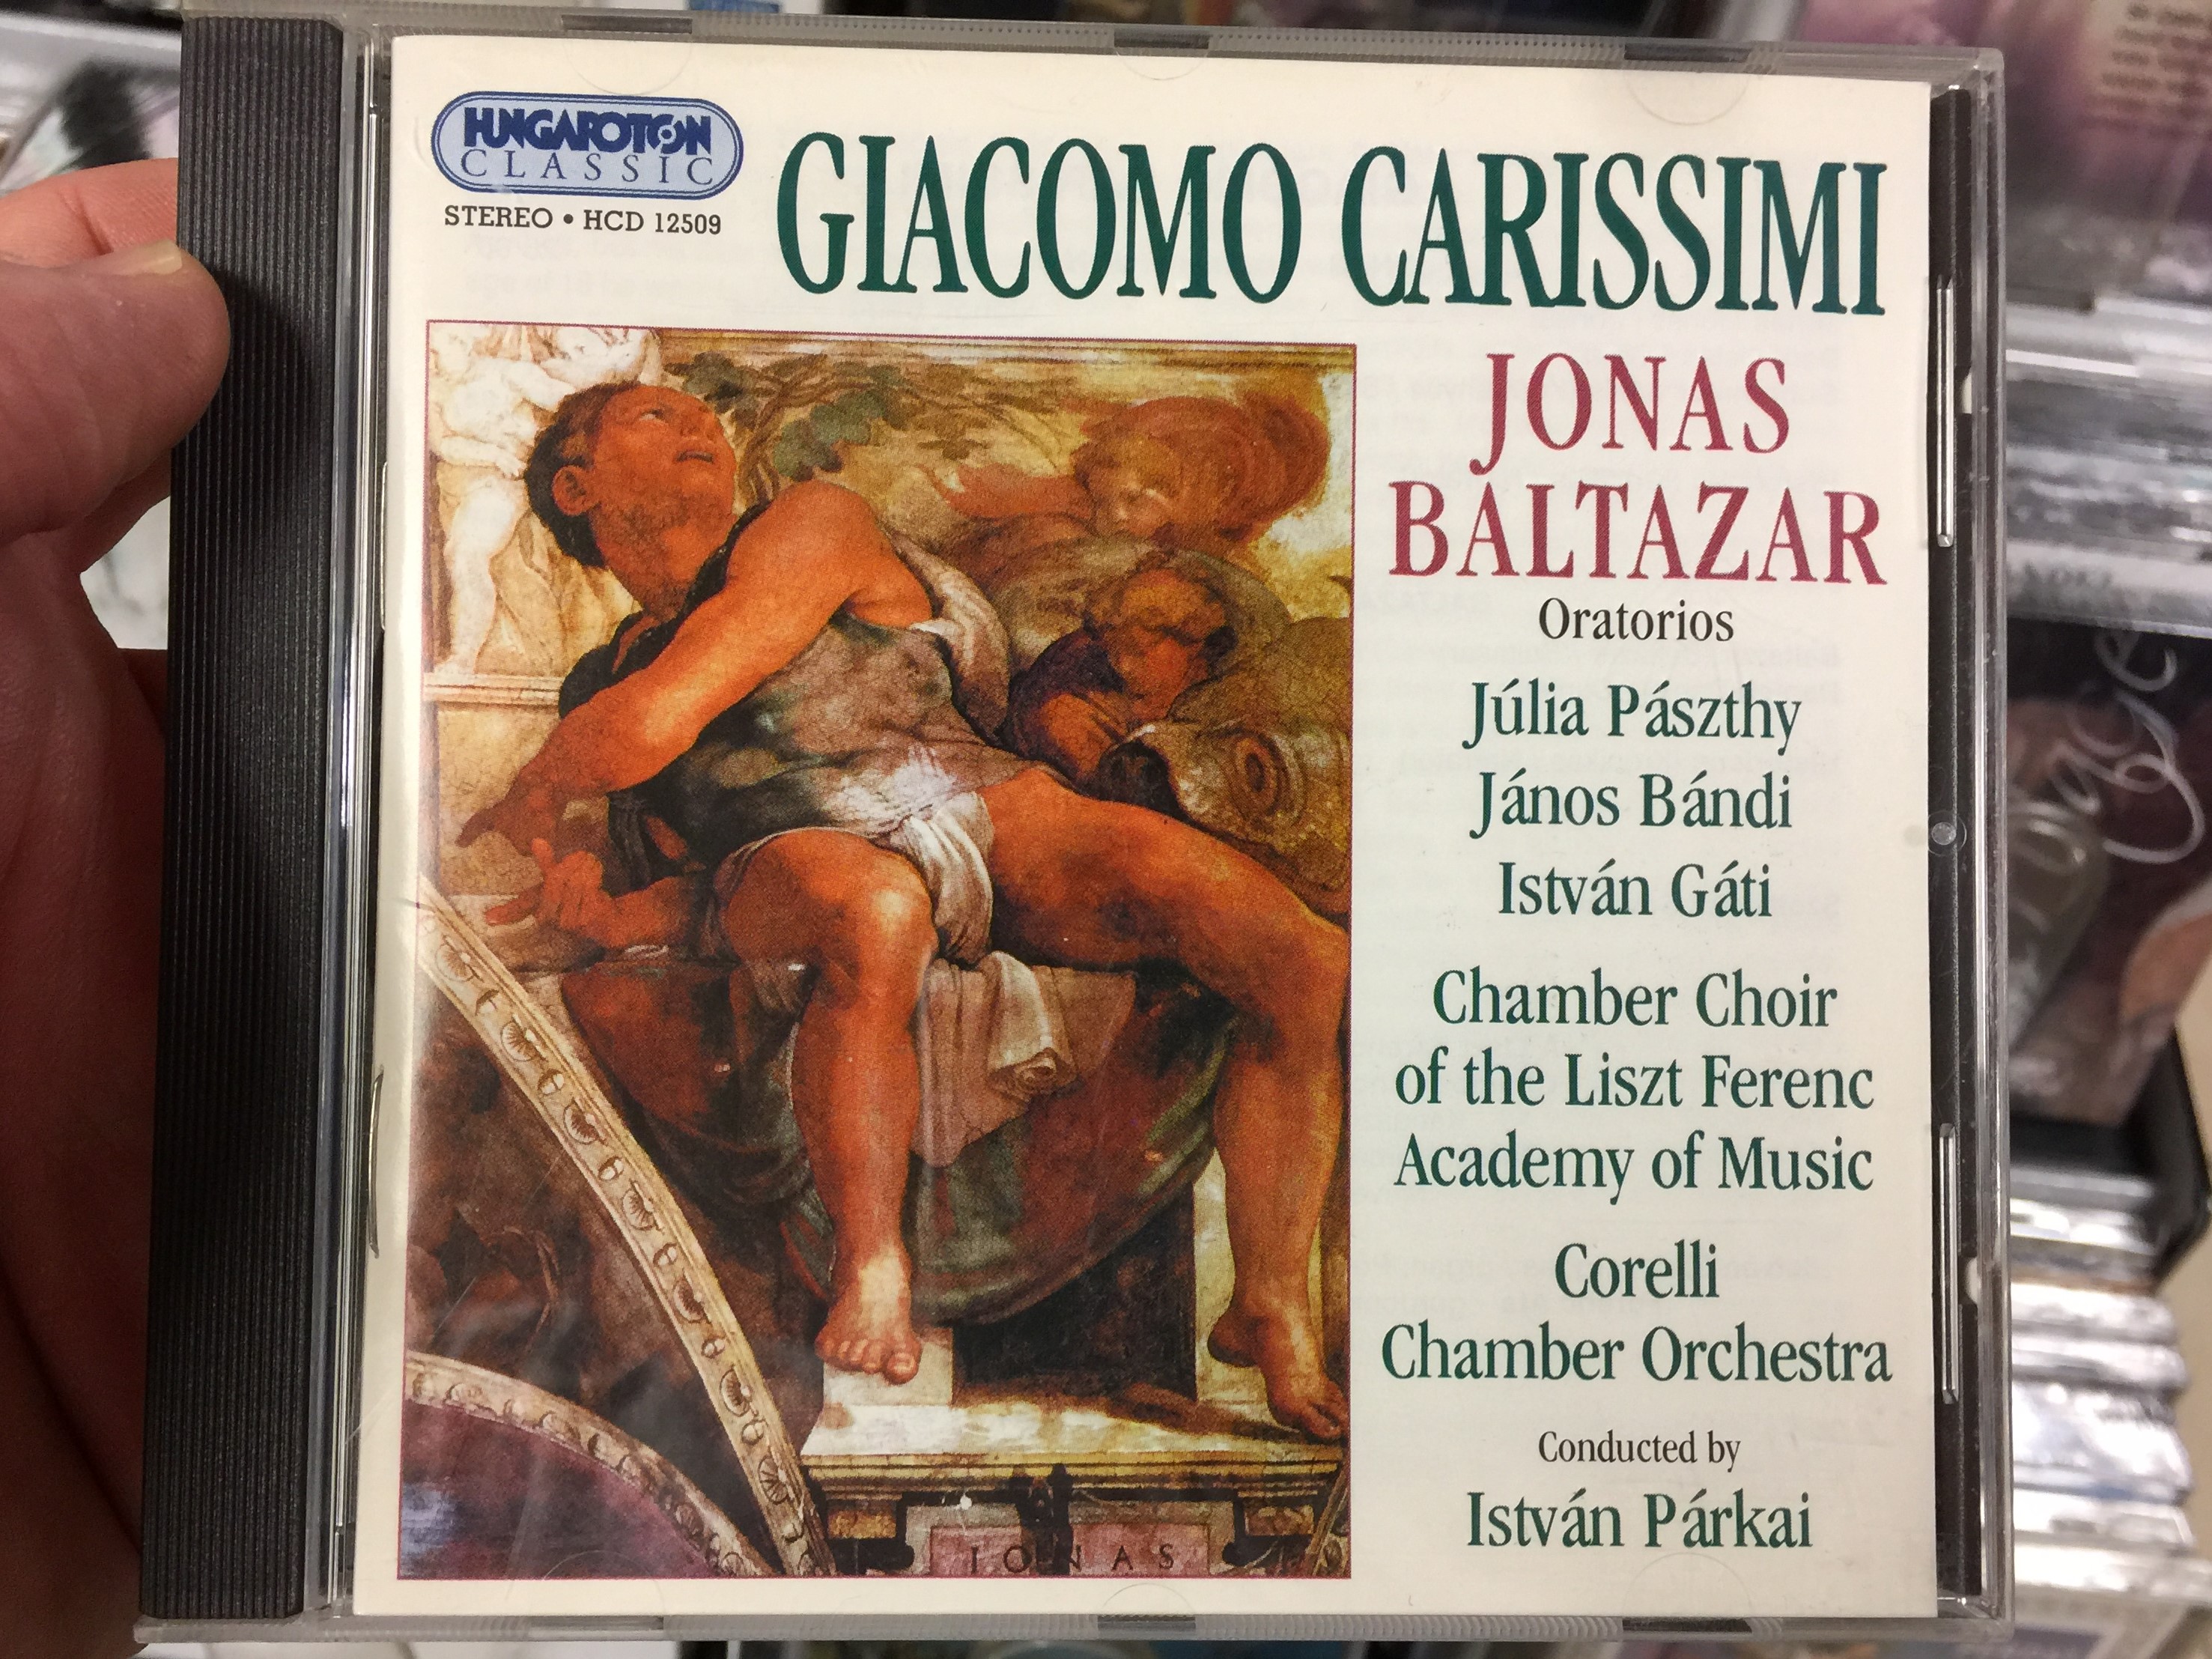 giacomo-carissimi-jonas-baltazar-oratorios-j-lia-p-szthy-j-nos-b-ndi-chamber-chorus-of-the-liszt-ferenc-academy-of-music-corelli-chamber-orchestra-conducted-by-istvan-parkai-hungaroto-1-.jpg